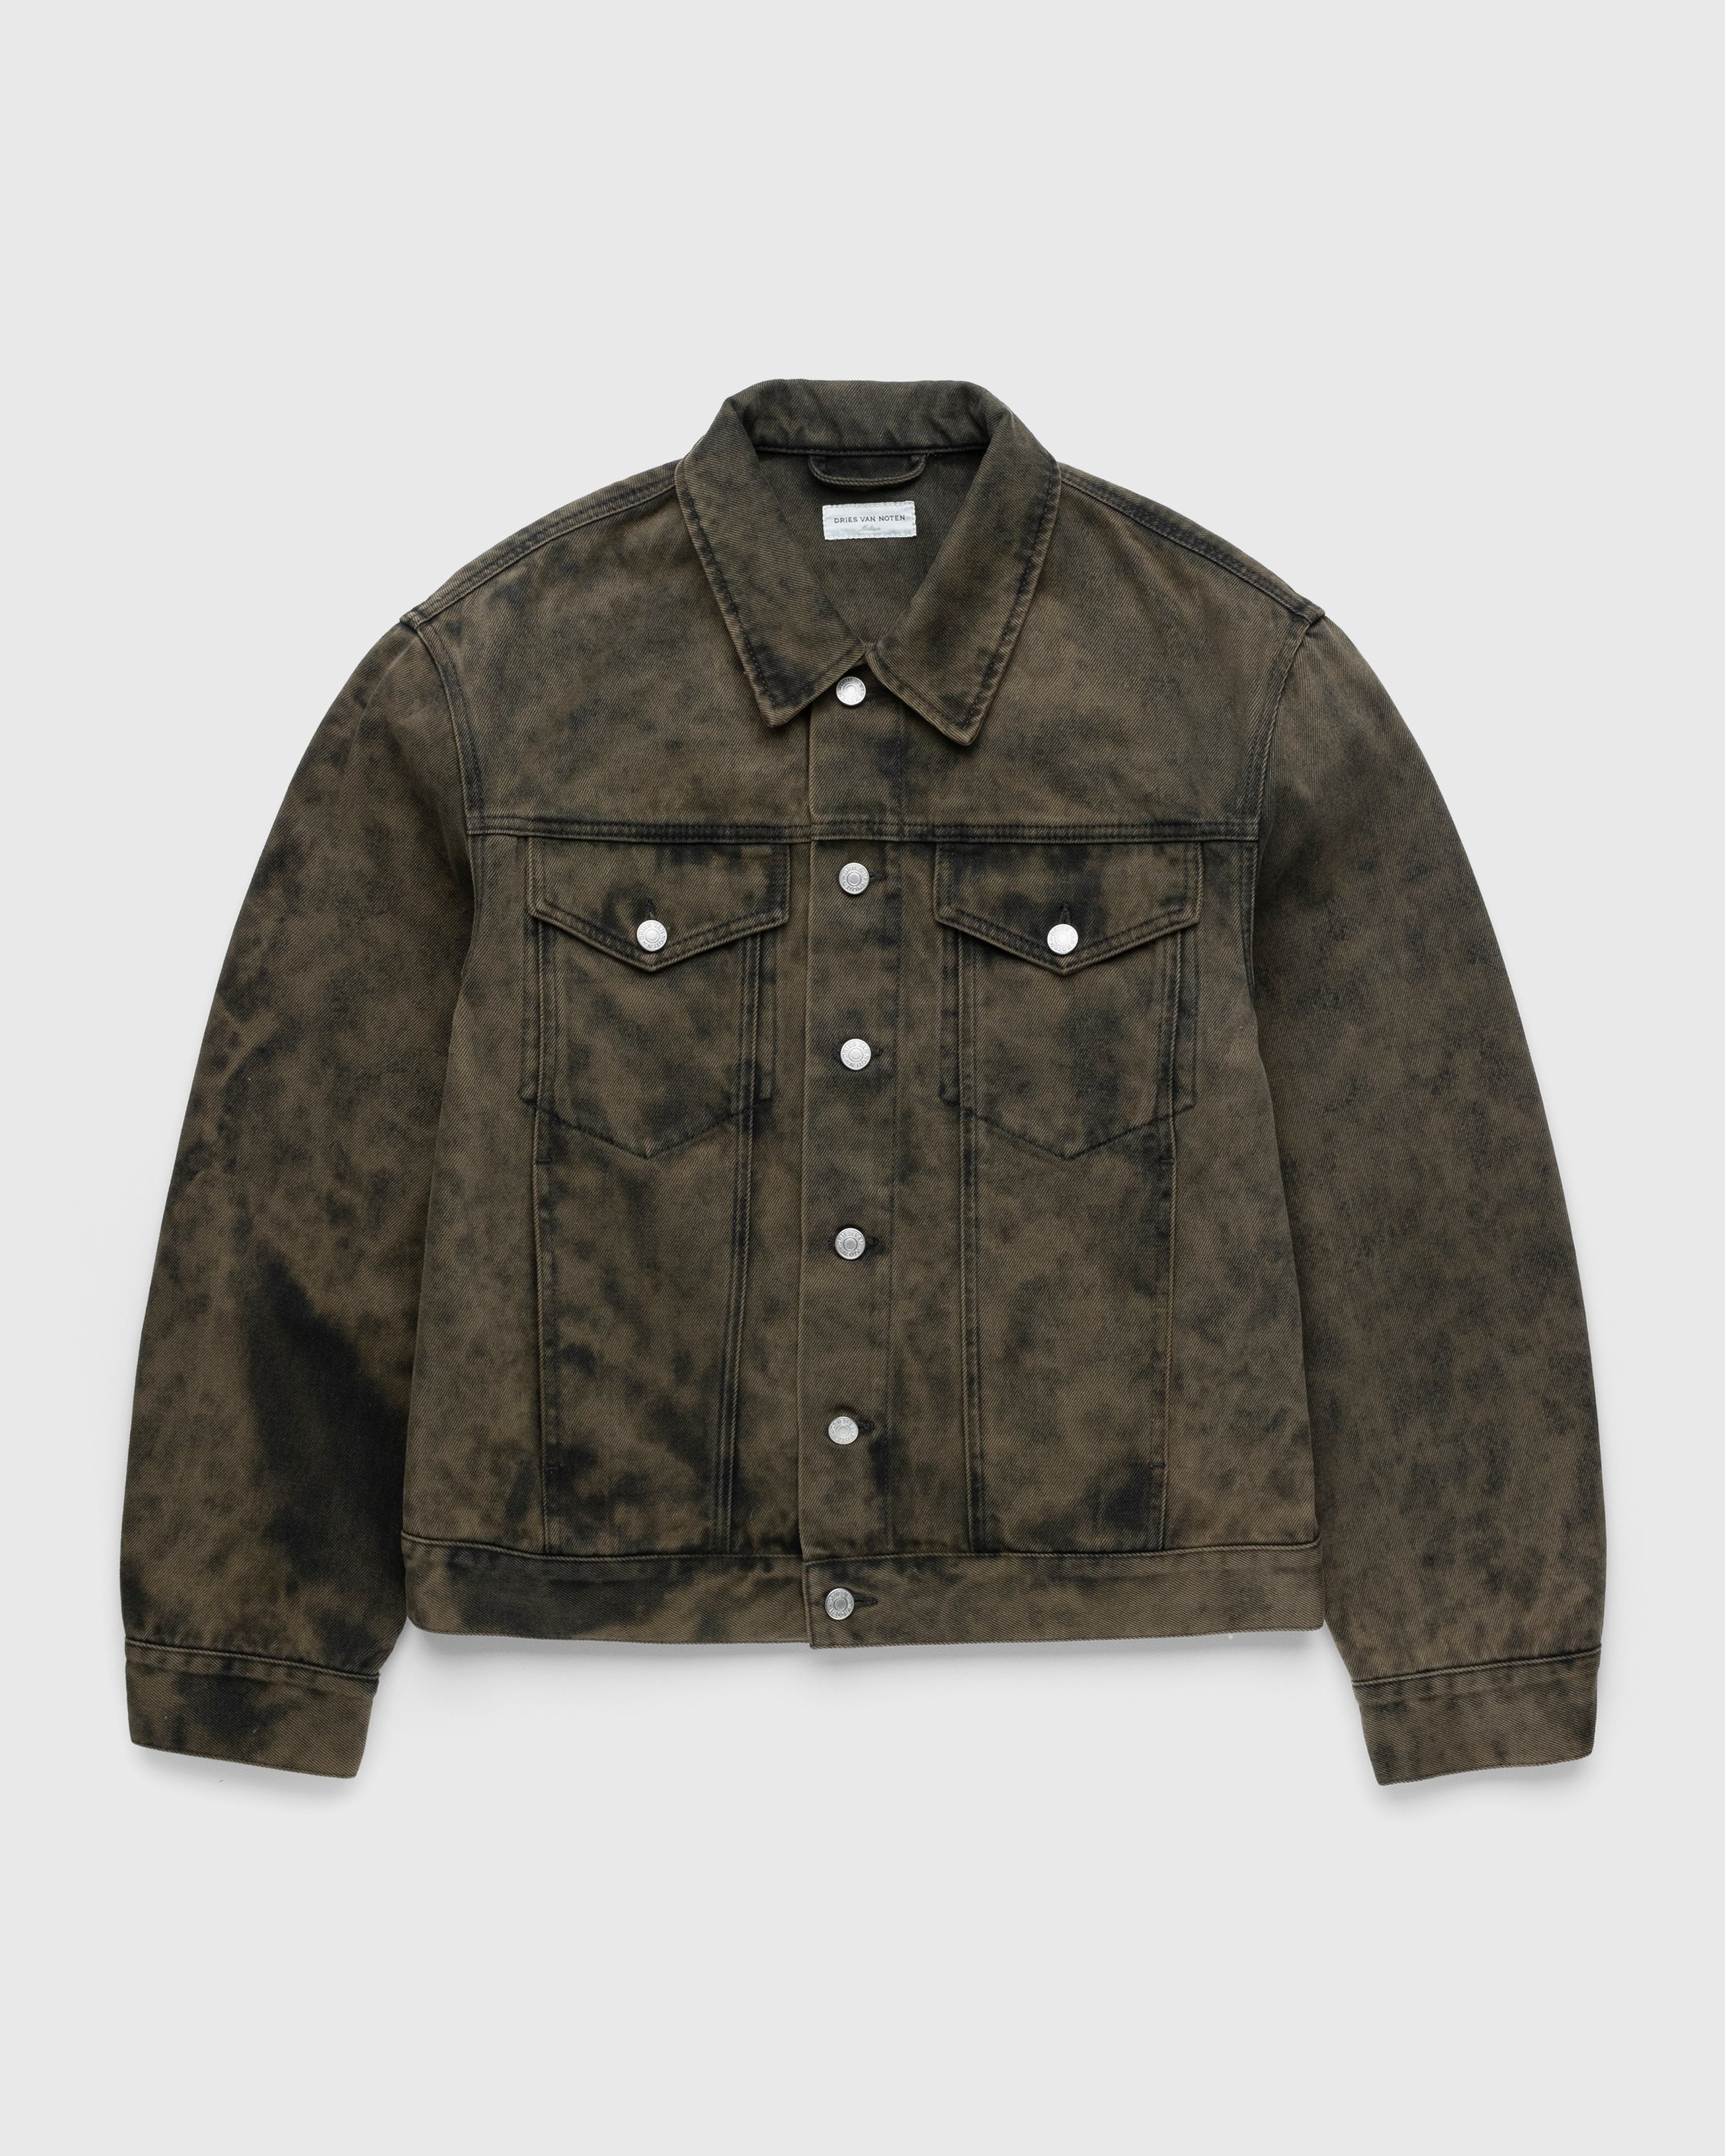 Dries van Noten – Vuskin Denim Jacket - Outerwear - Green - Image 1